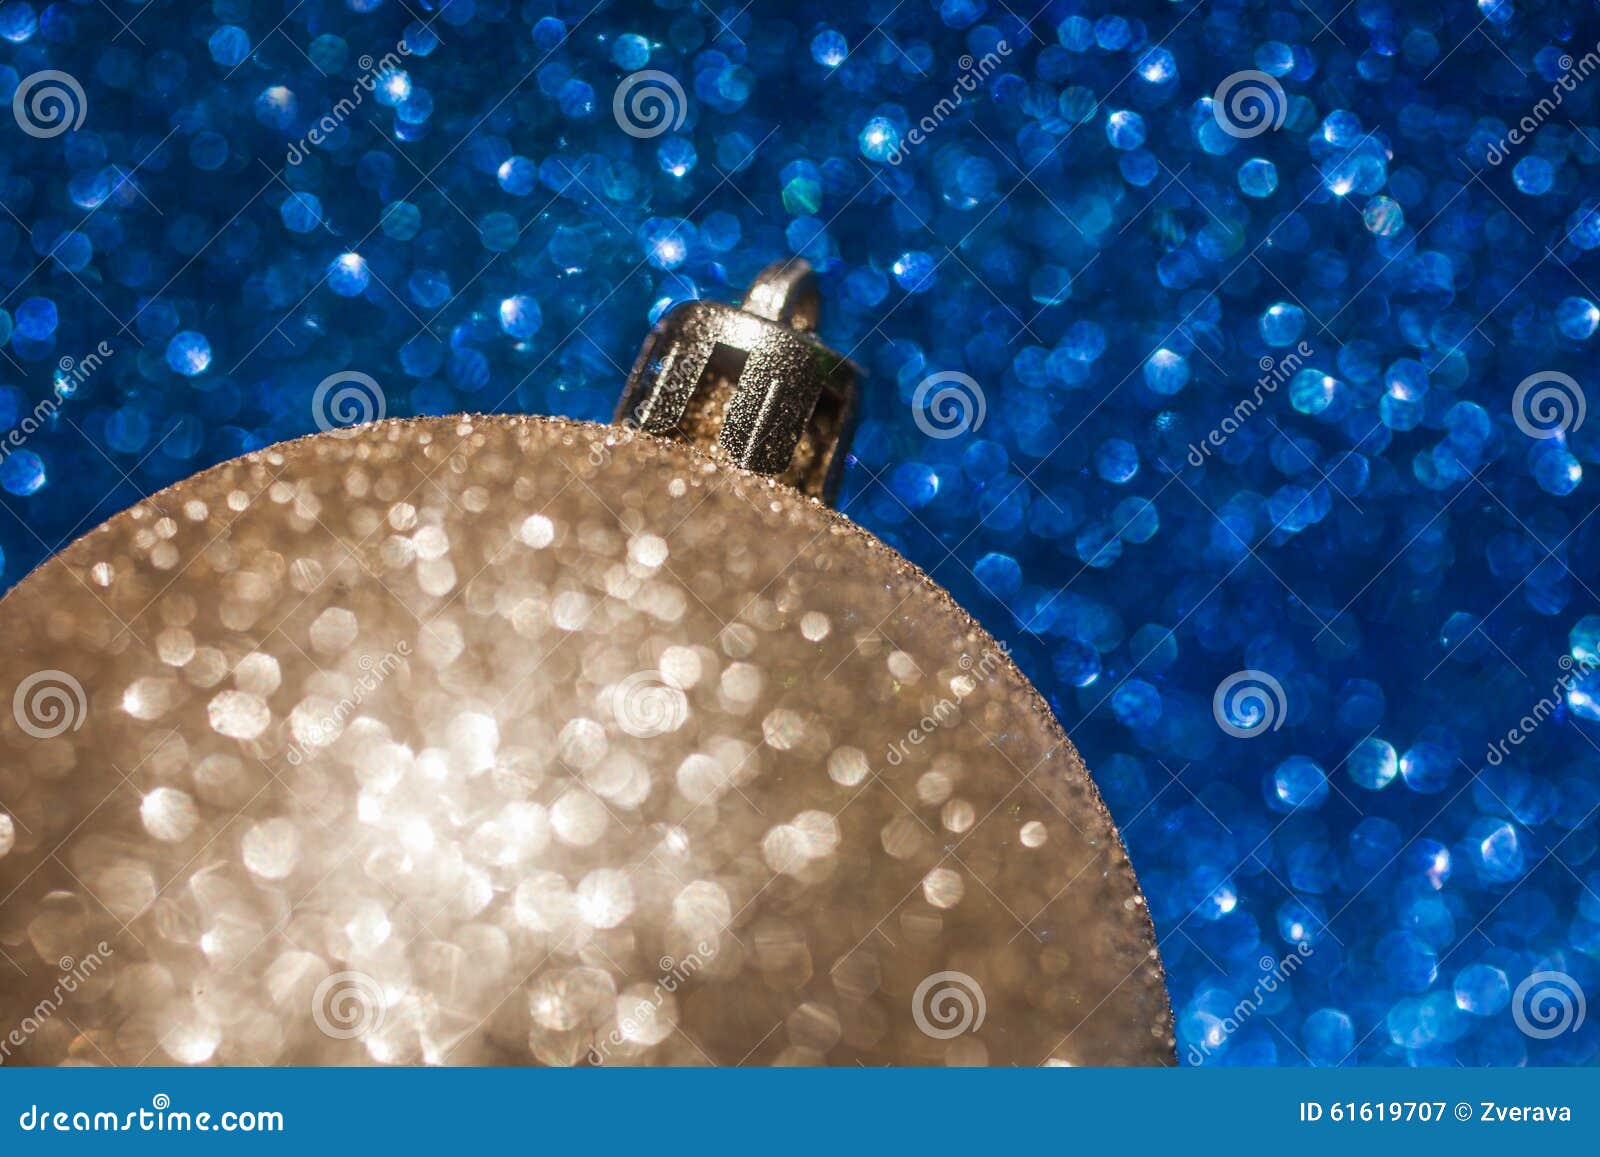 Golden Christmas Ball on Blue Glitter Background Stock Image - Image of ...